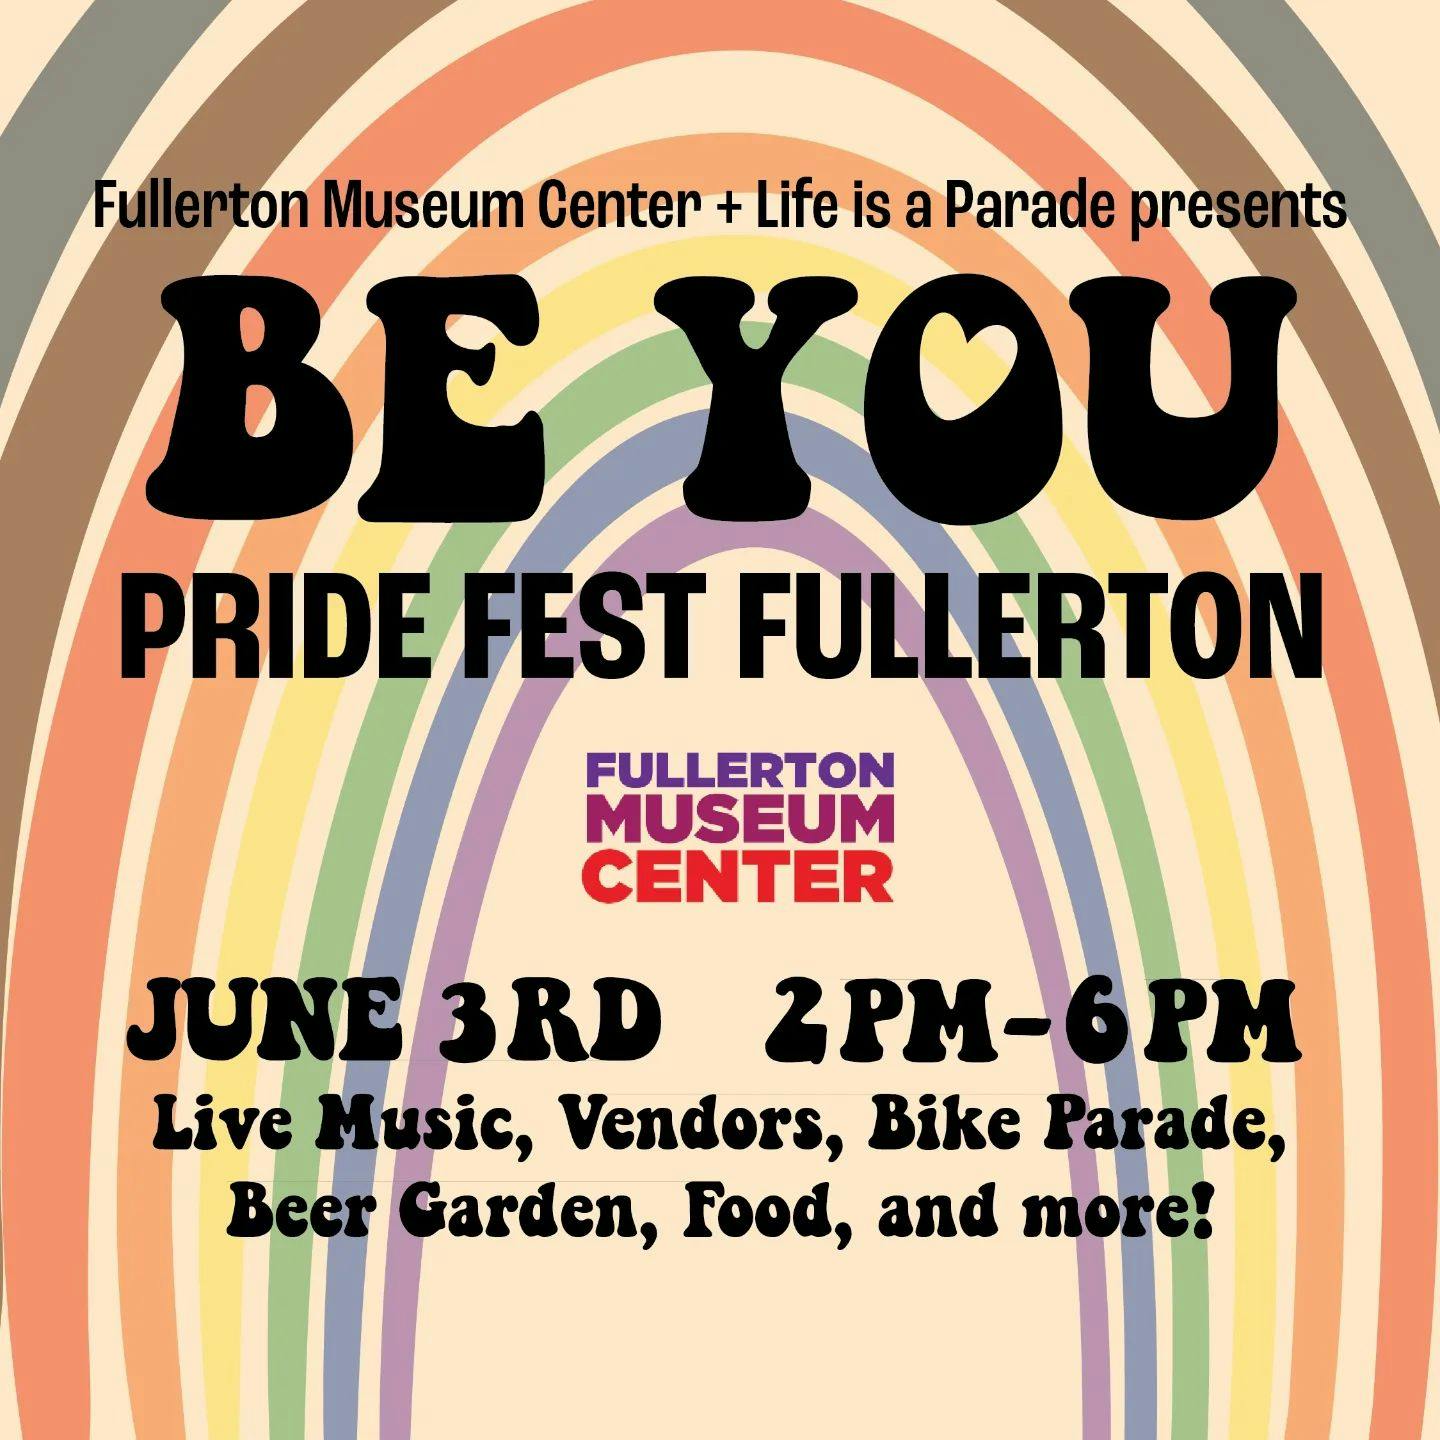 BE YOU Pride Fest Fullerton